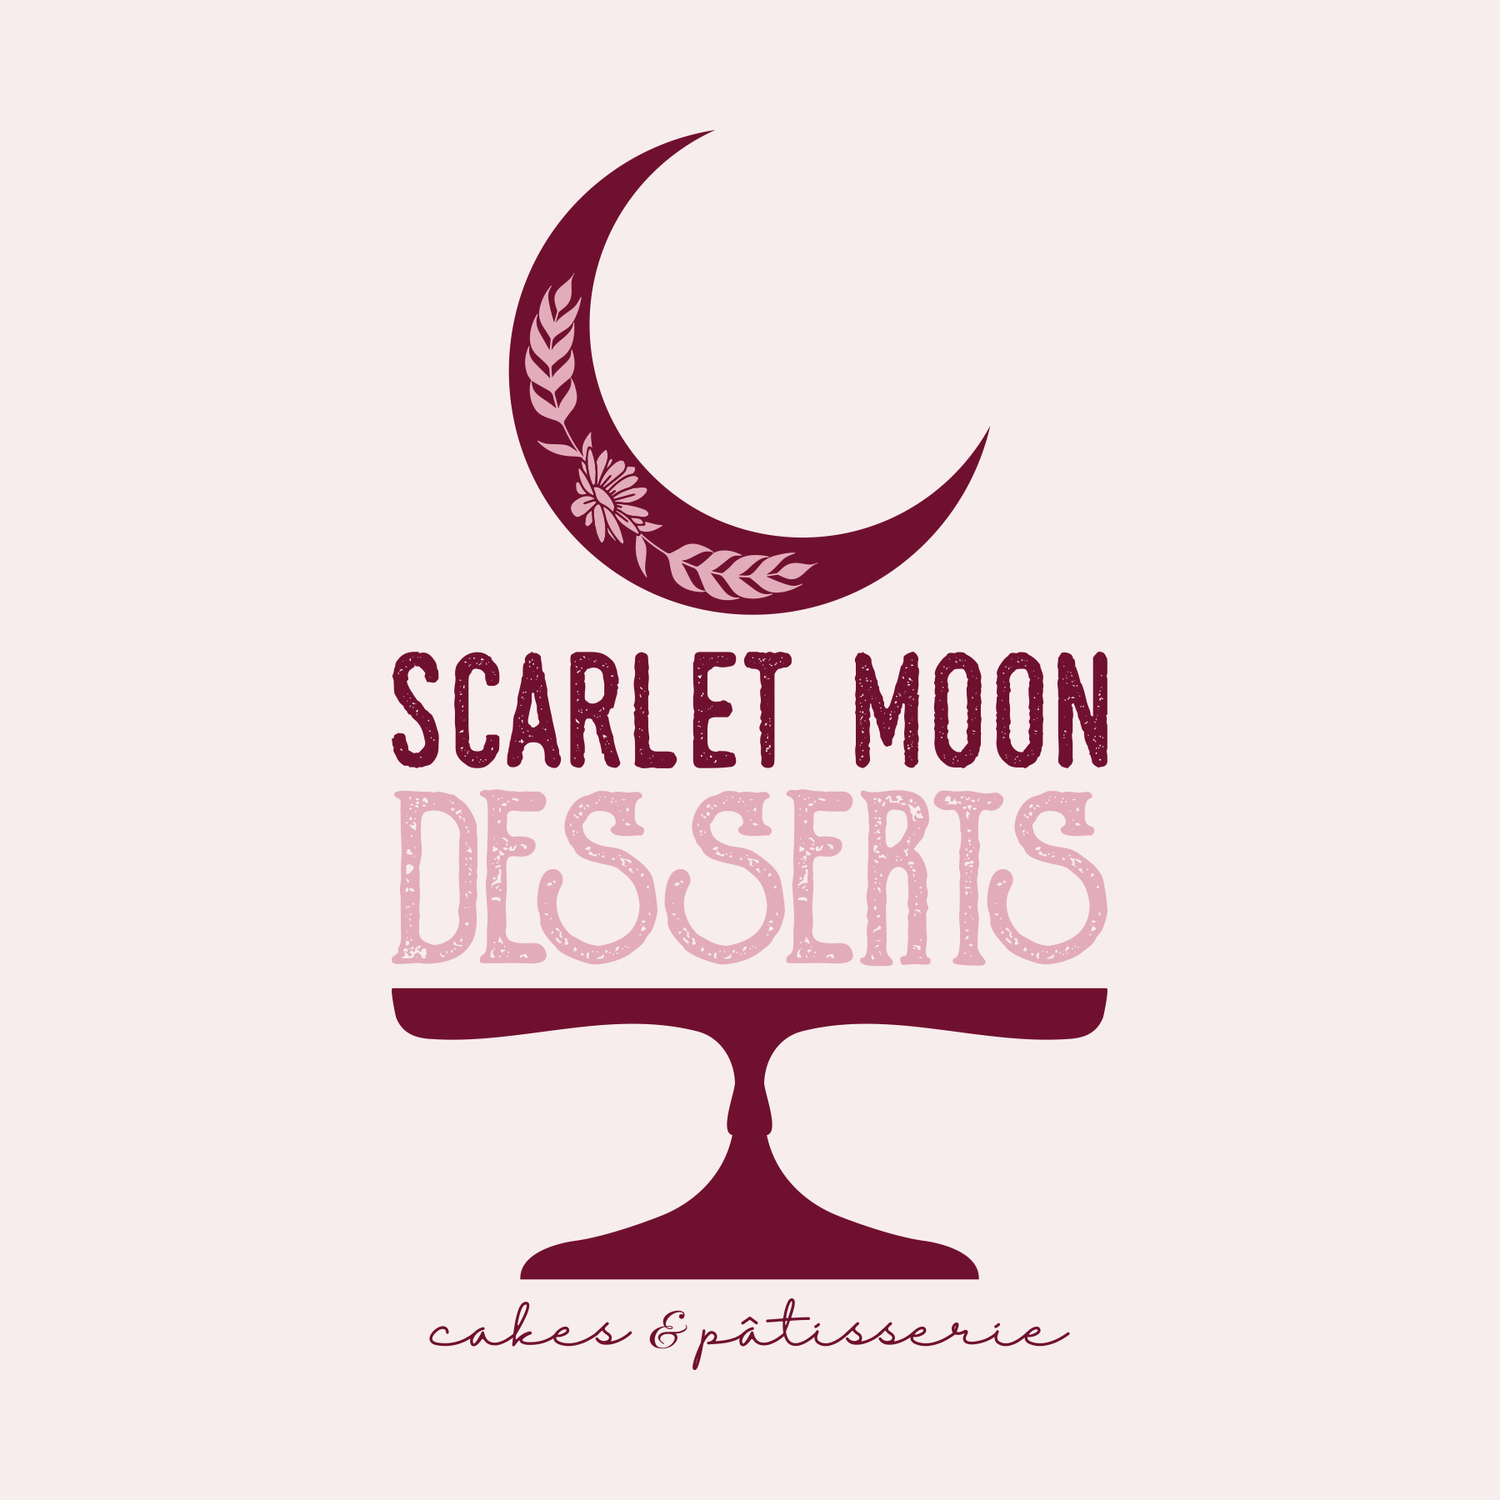 Scarlet Moon Desserts 